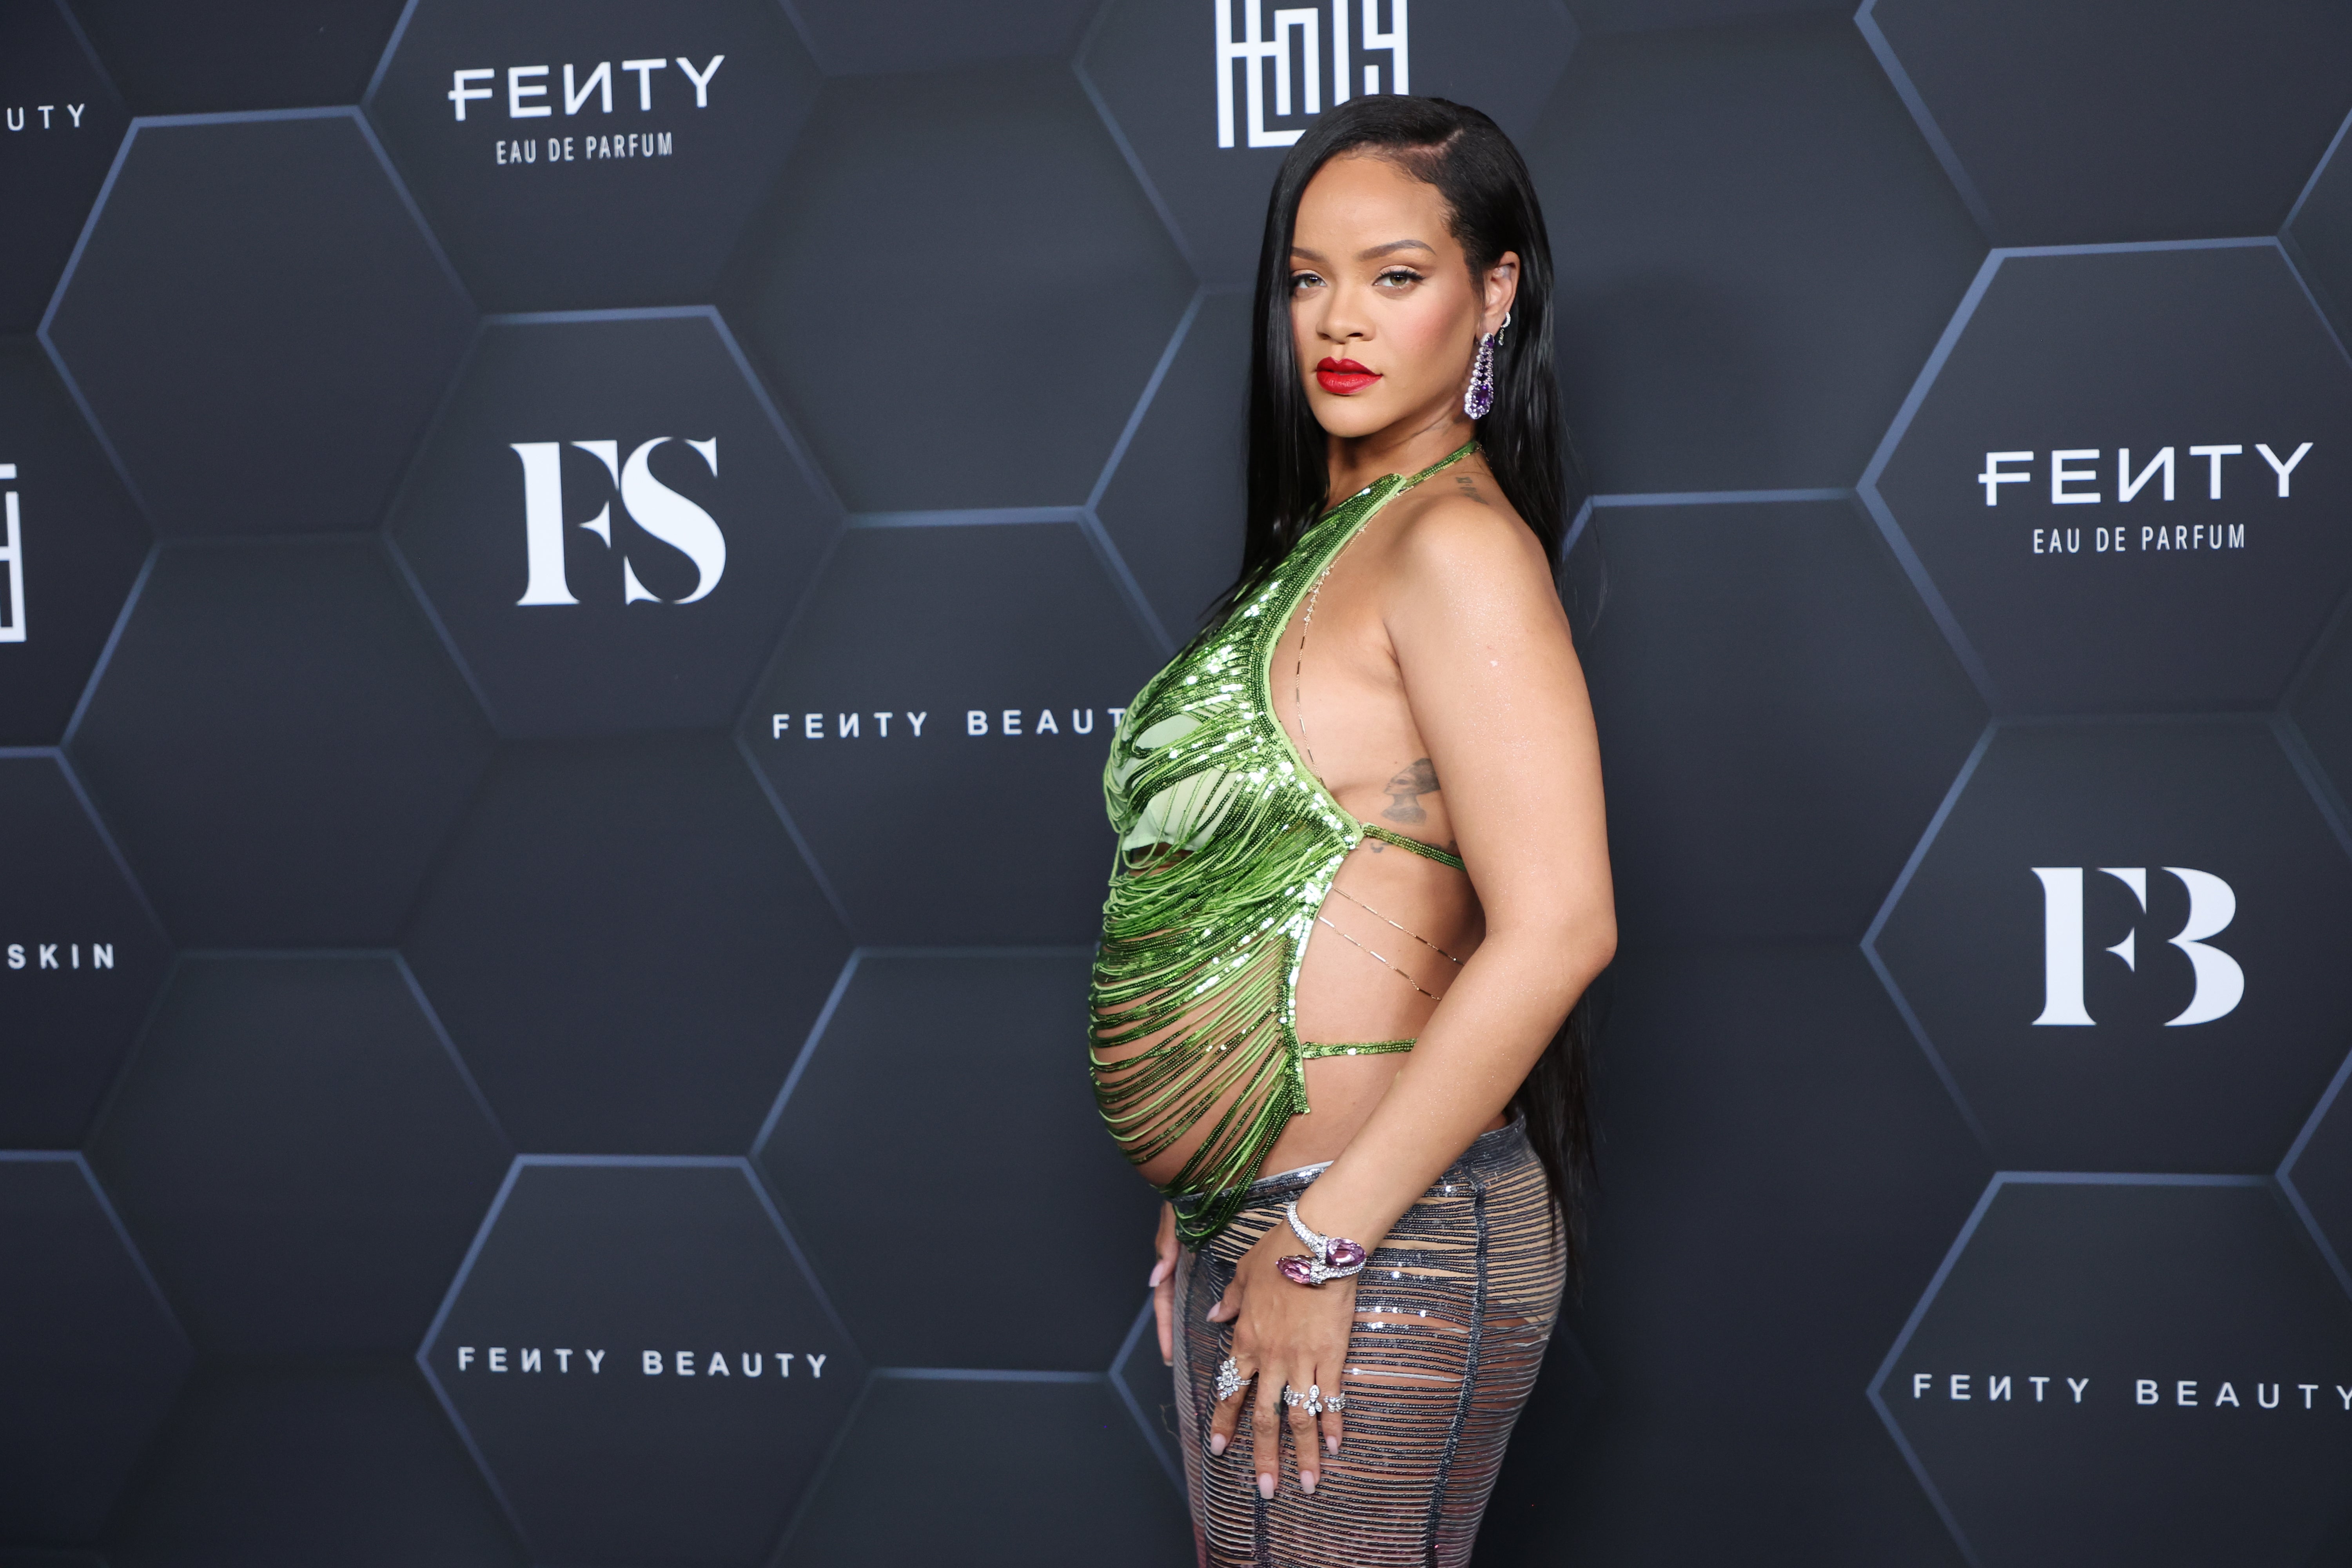 Rihannas sexy maternity looks receive praise pic